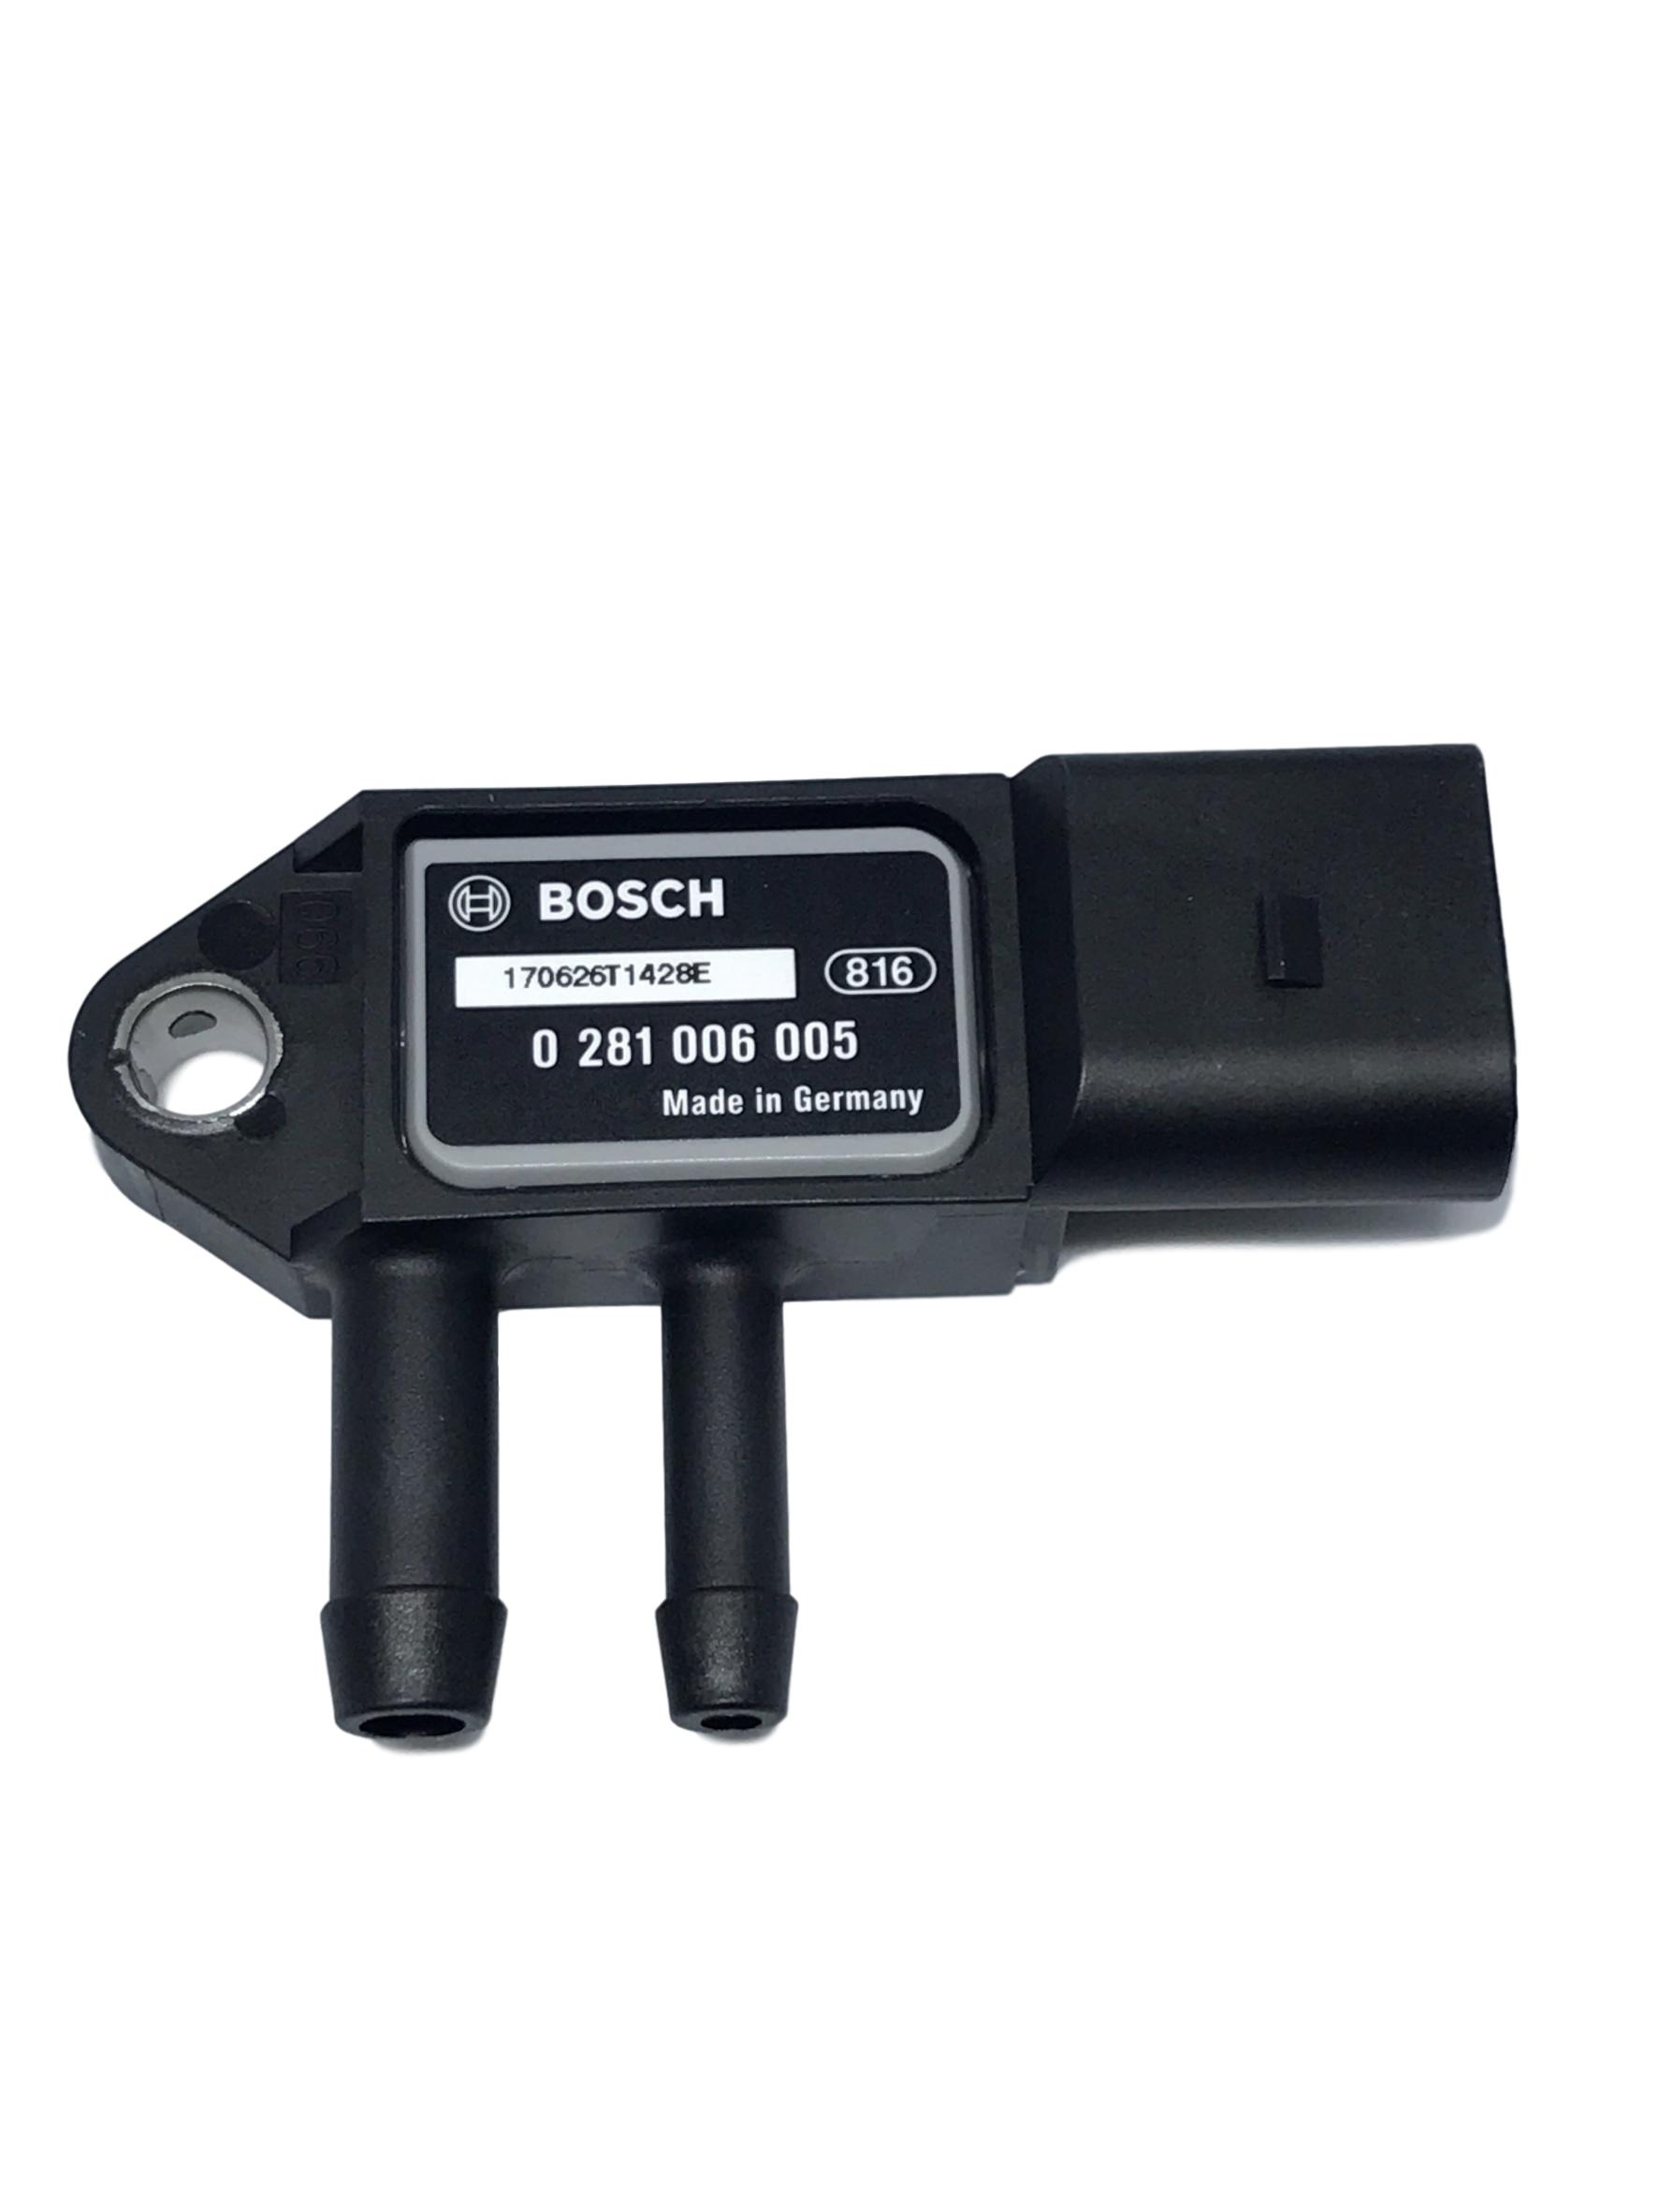 Sensor Differenzdrucksensor Audi A6 4F Bosch 0281006005 – ahg-clean –  Dieselpartikelfilter Reinigung – Partikelfilter – DPF – Rußpartikelfilter